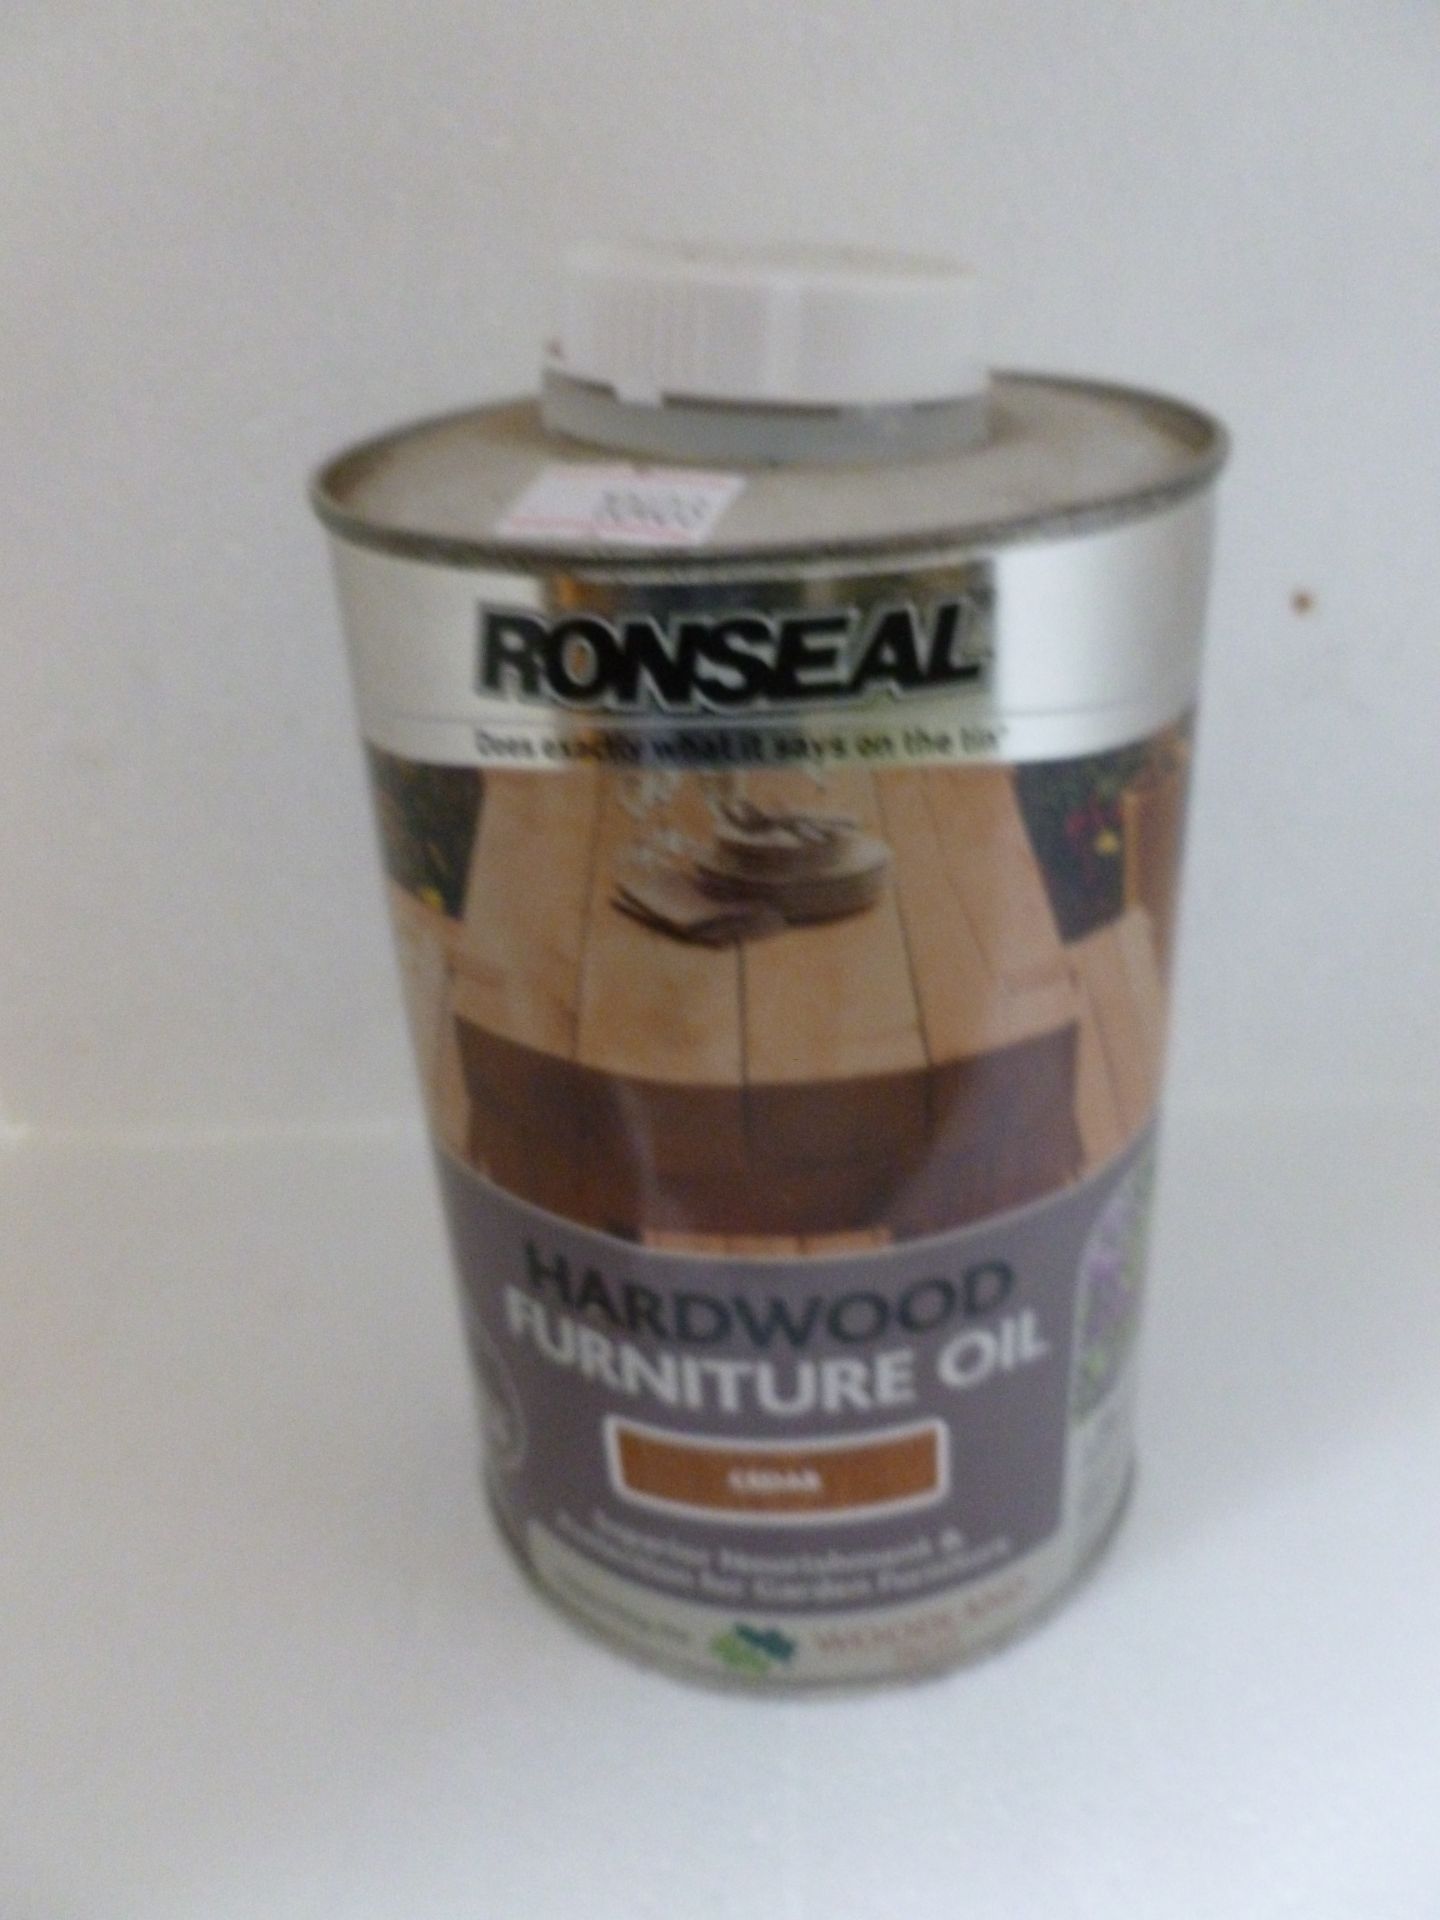 1L of Ronseal Hardwood Furniture Oil in Cedar Colo